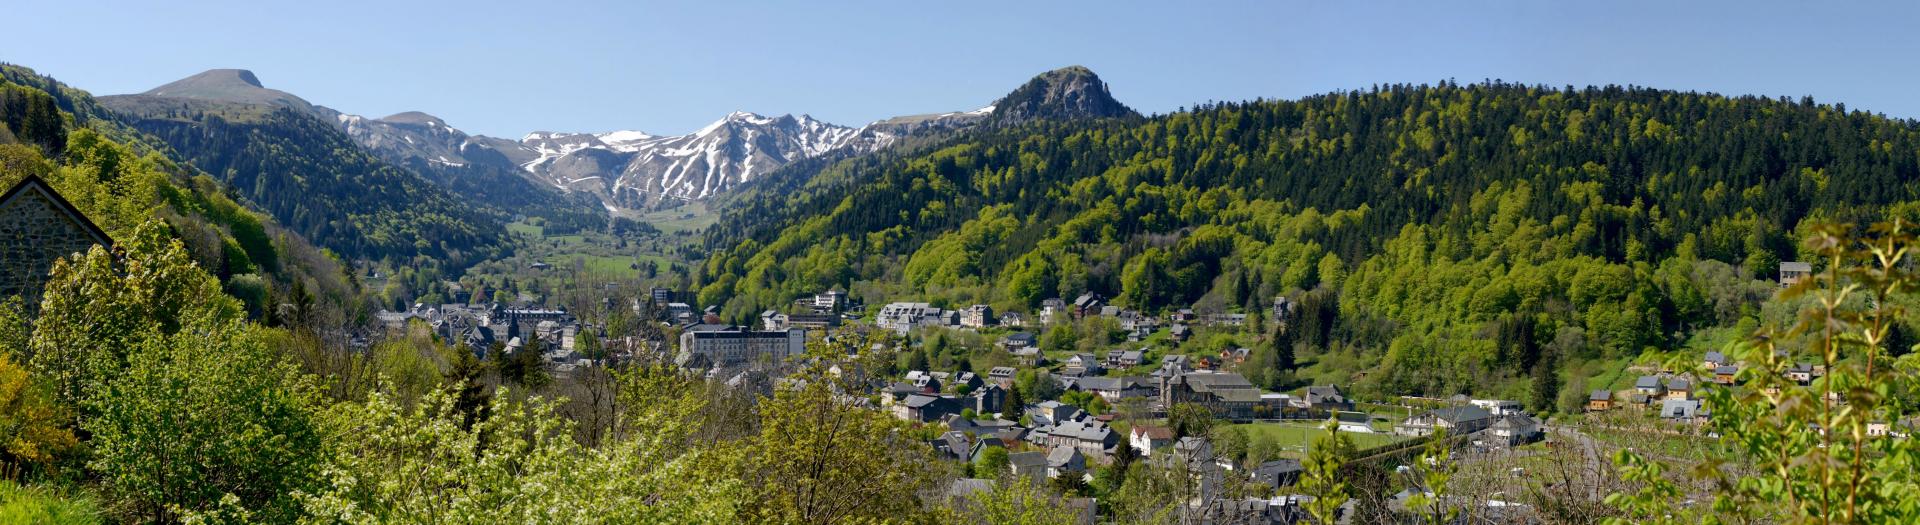 La vallee du mont dore et du sancy wikimedia commons own work sptephane deniel 1